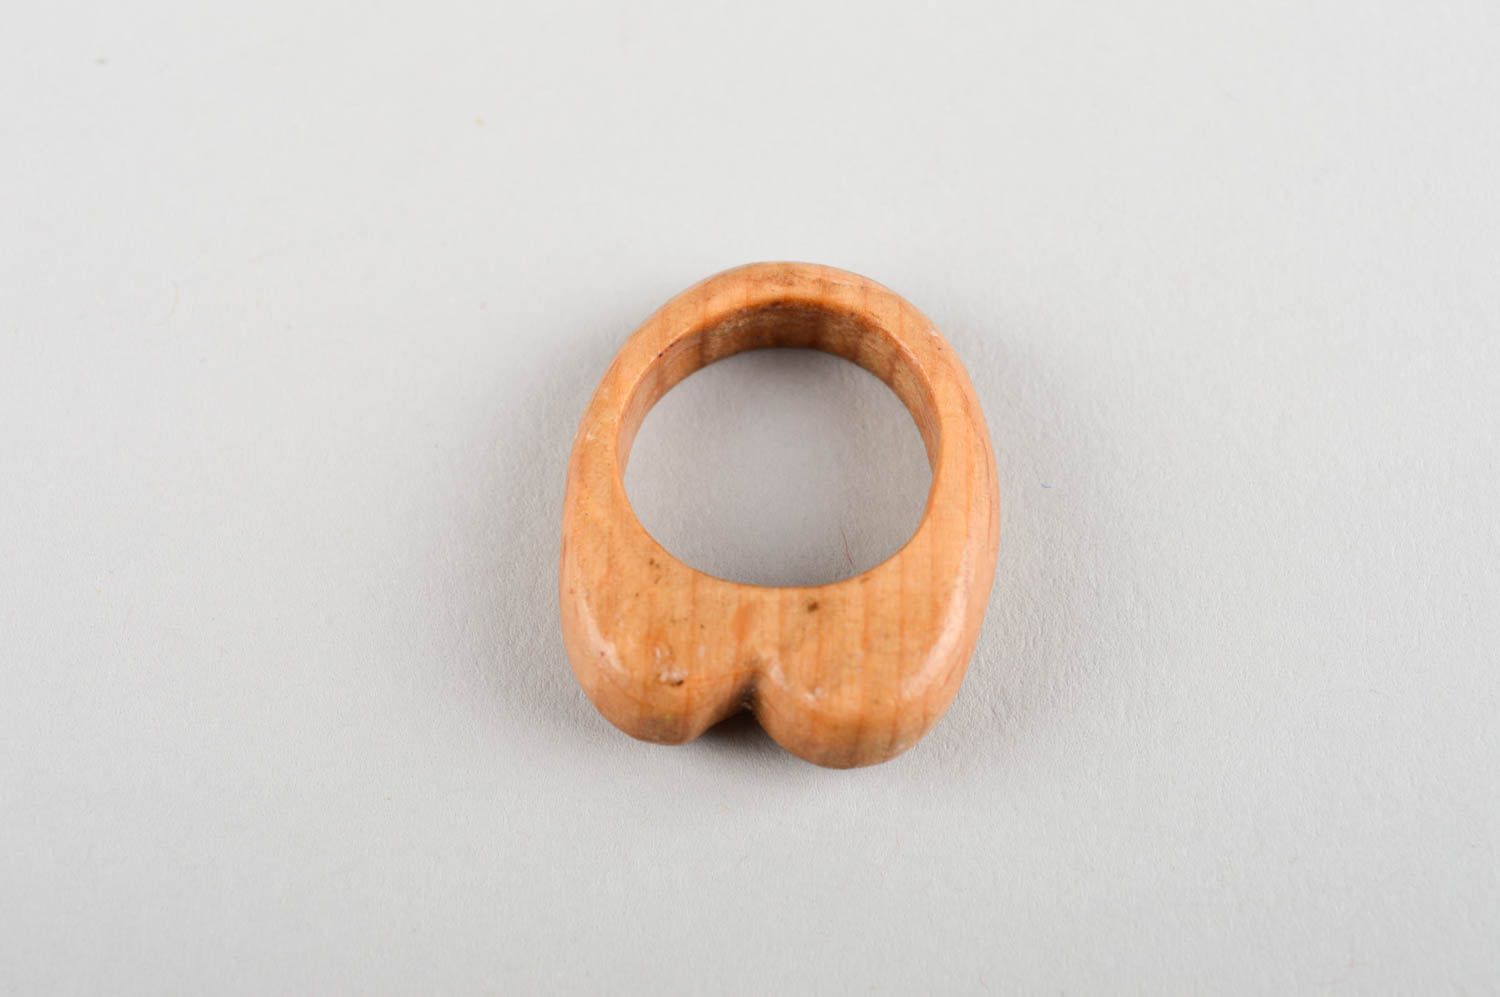 Cute handmade wooden ring wooden jewelry artisan jewelry designs wood craft photo 3